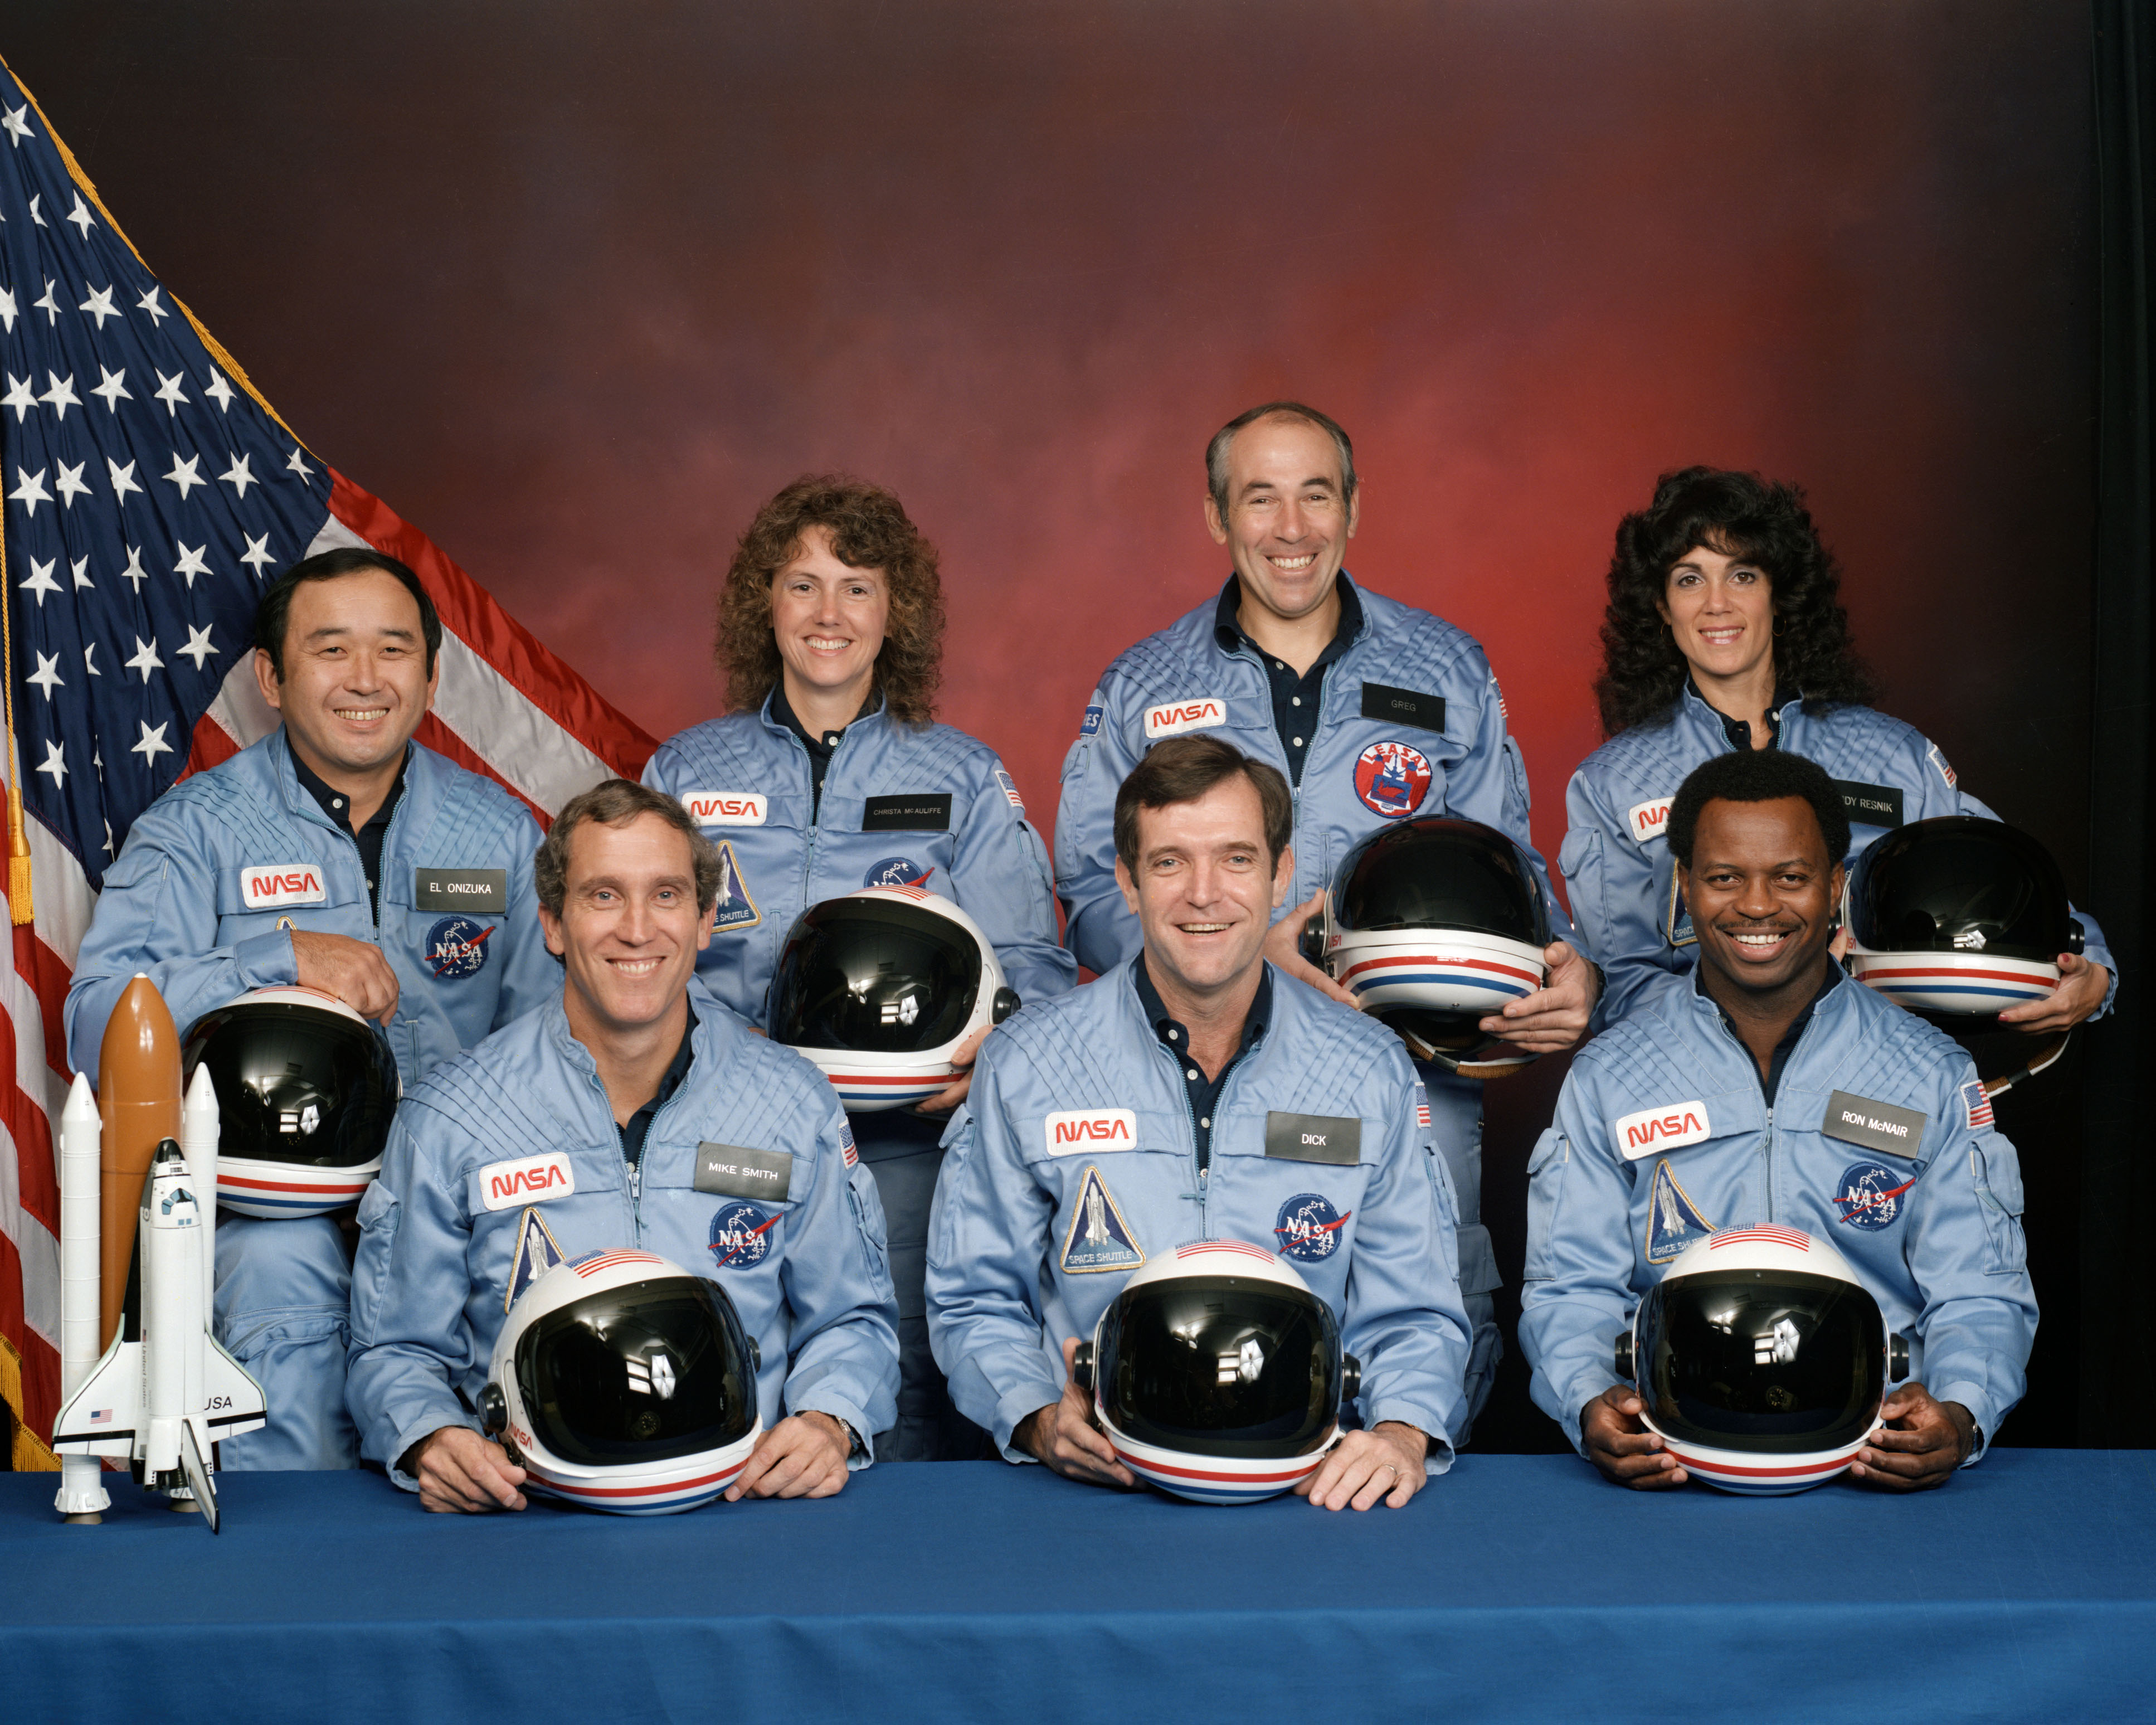 NASA space shuttle challenger crew